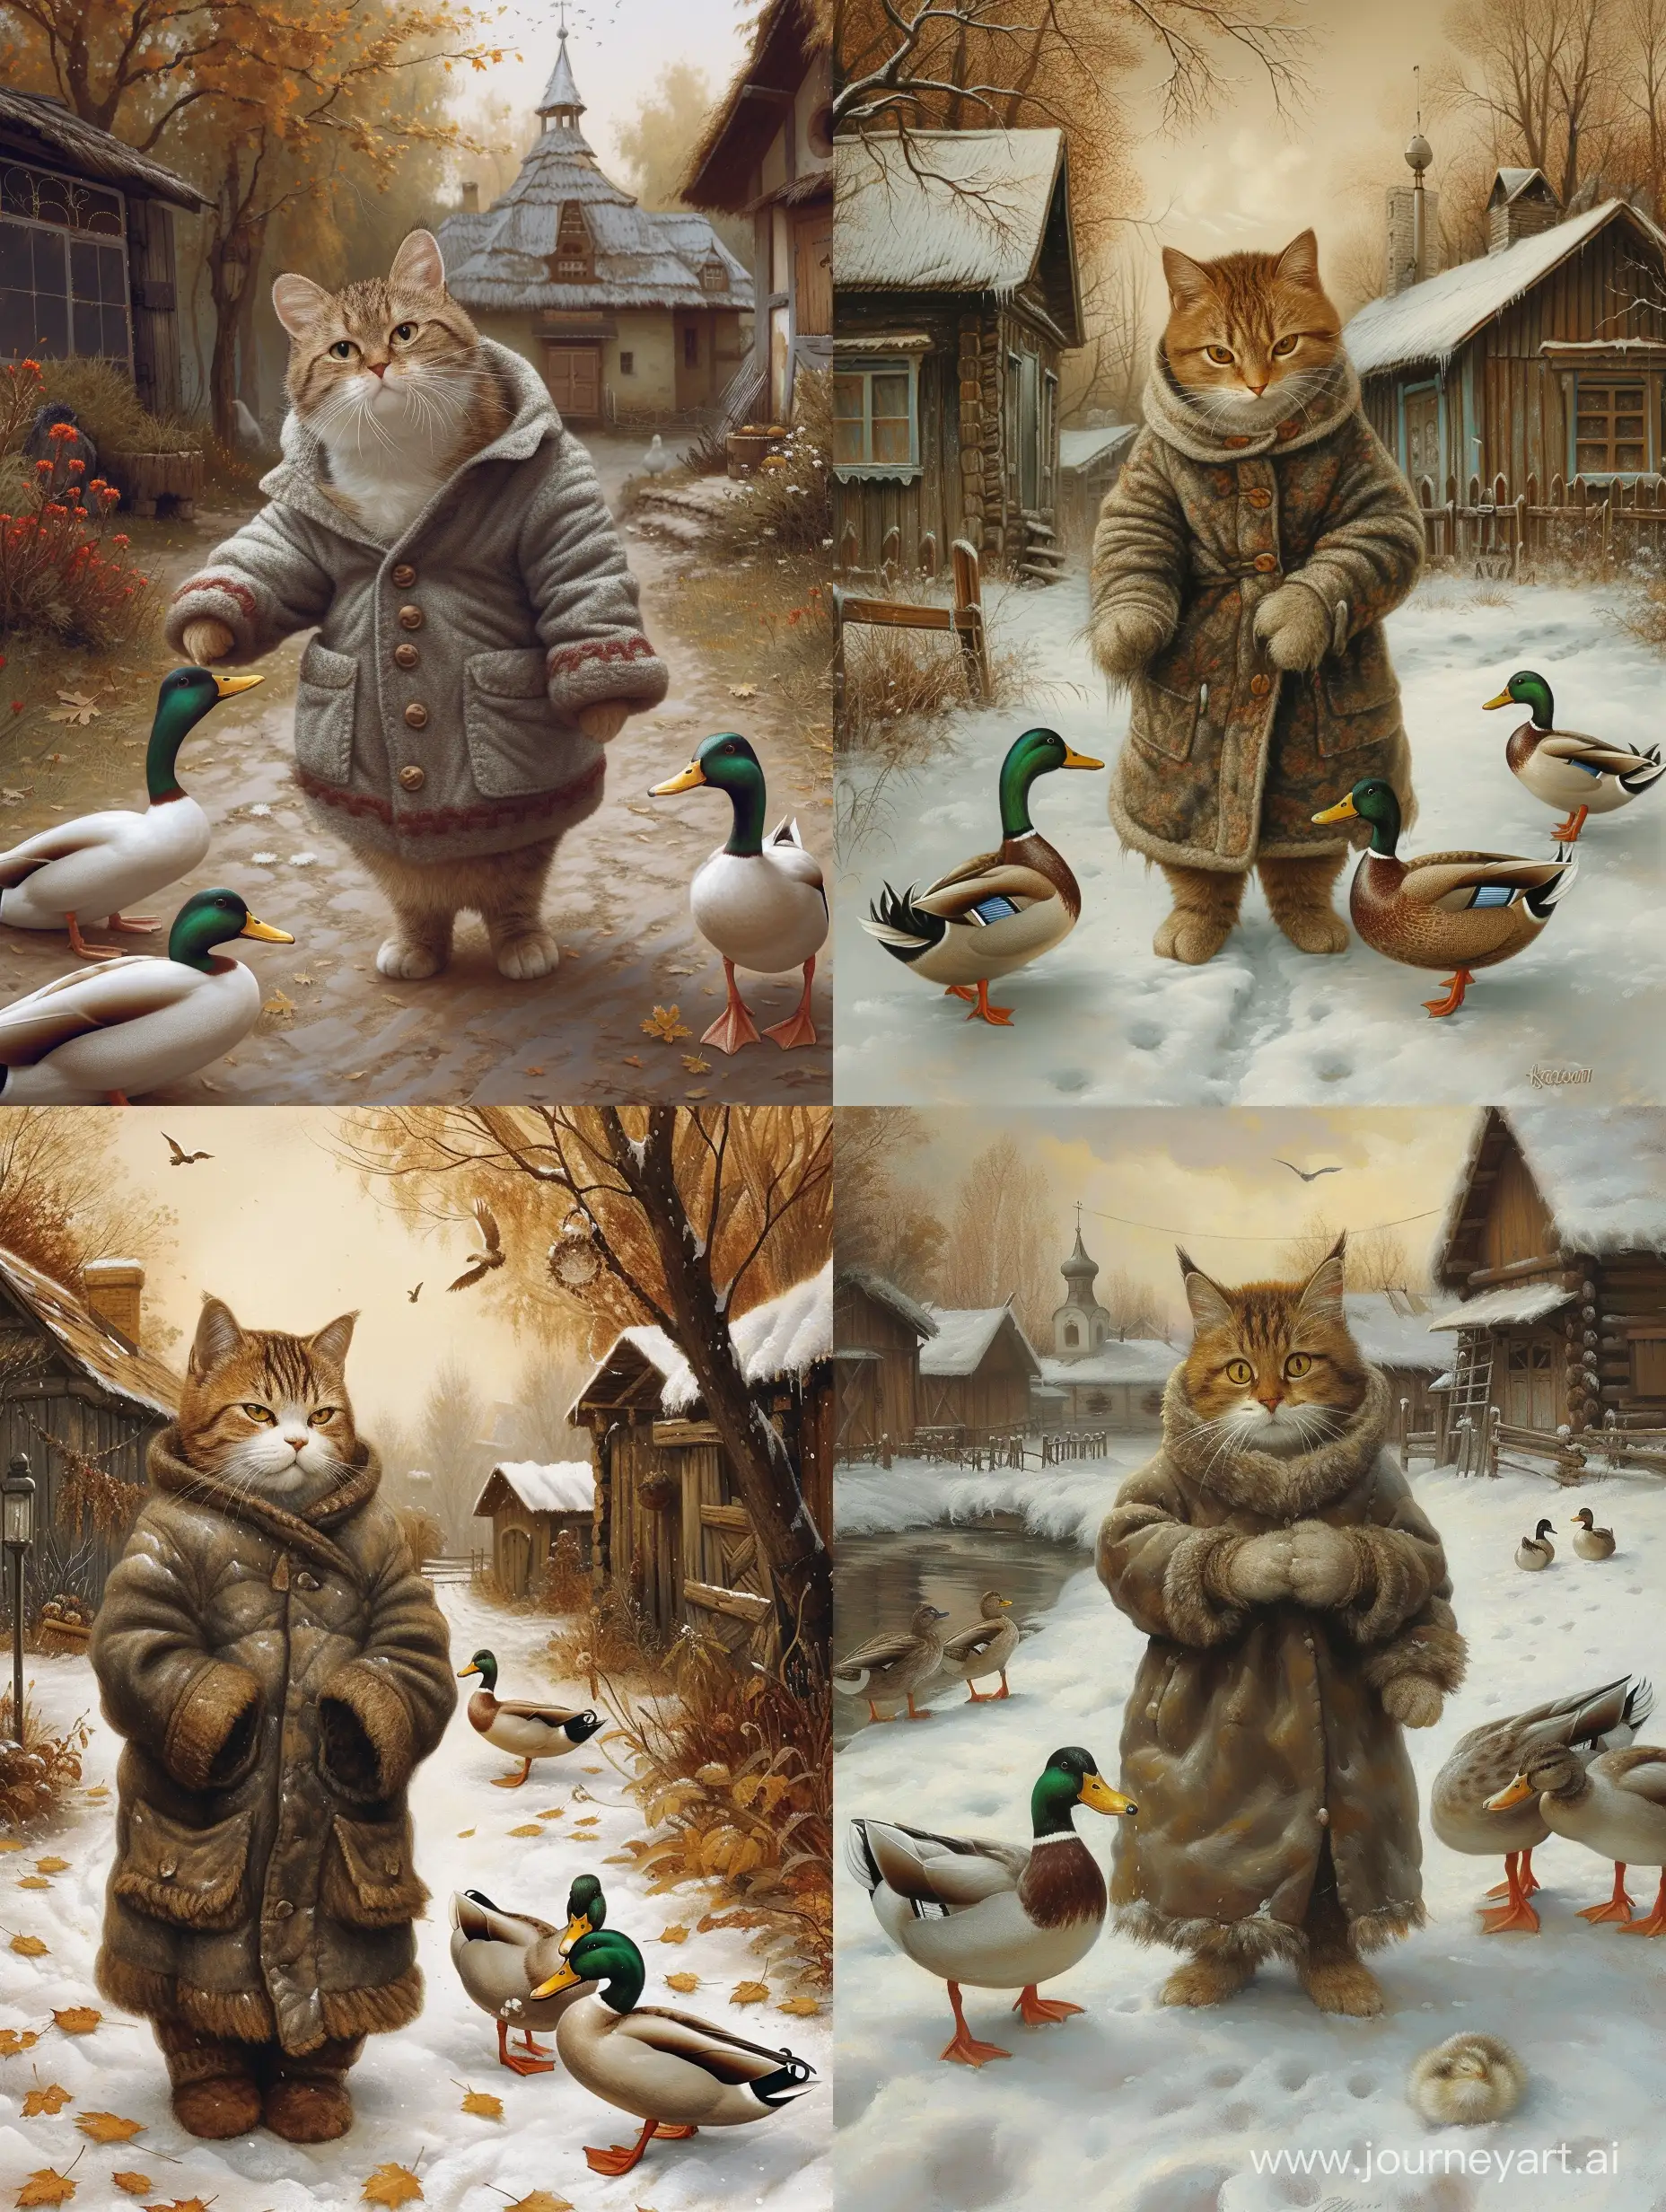 Cozy-Cat-Feeding-Ducks-in-Village-Charming-Home-Scene